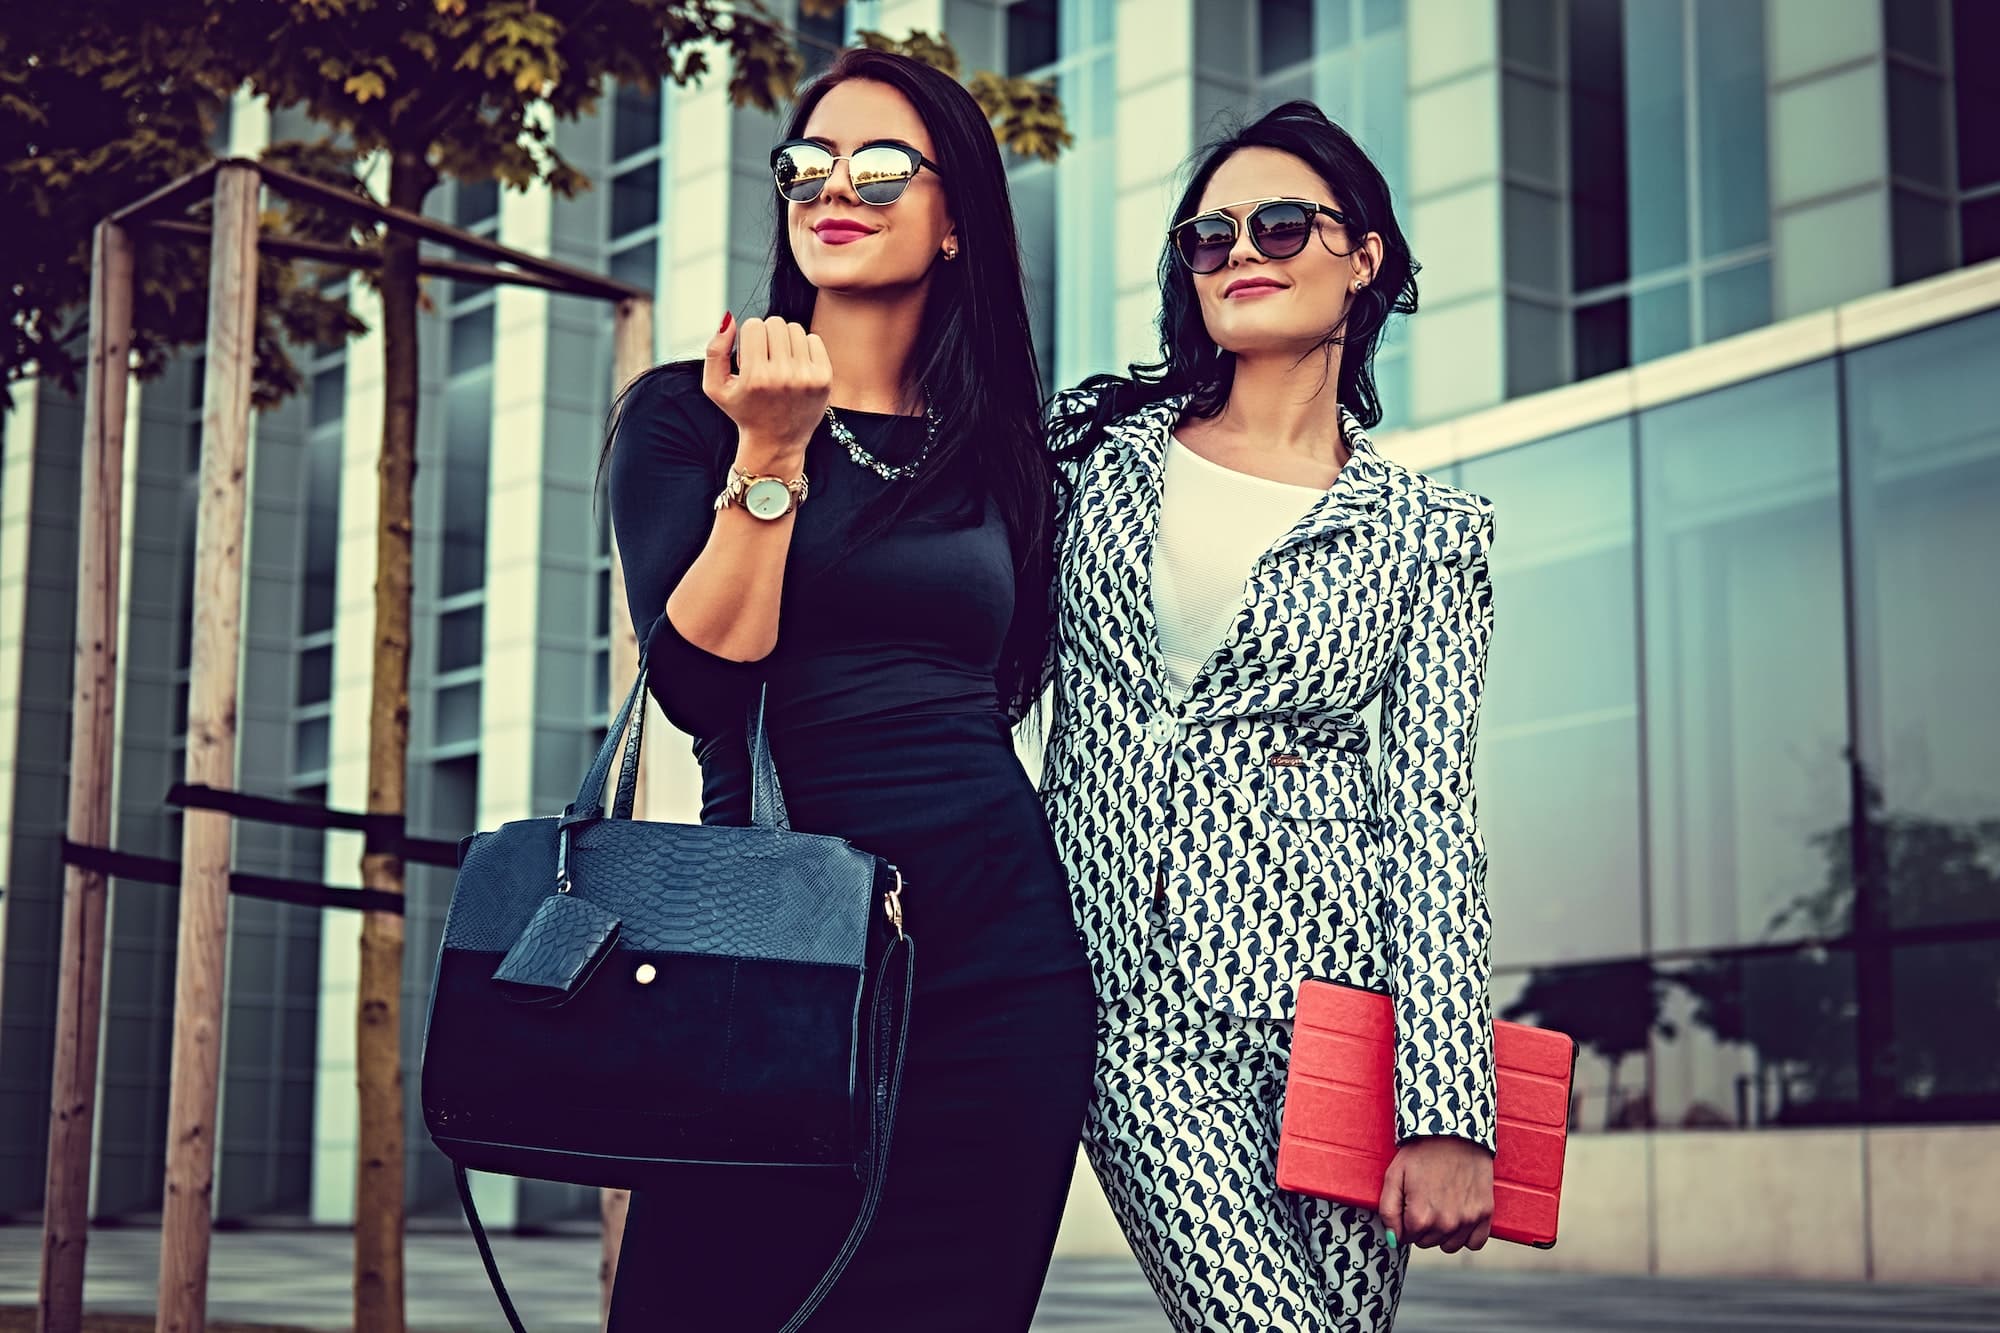 Portrait of two fashionable women on a street.